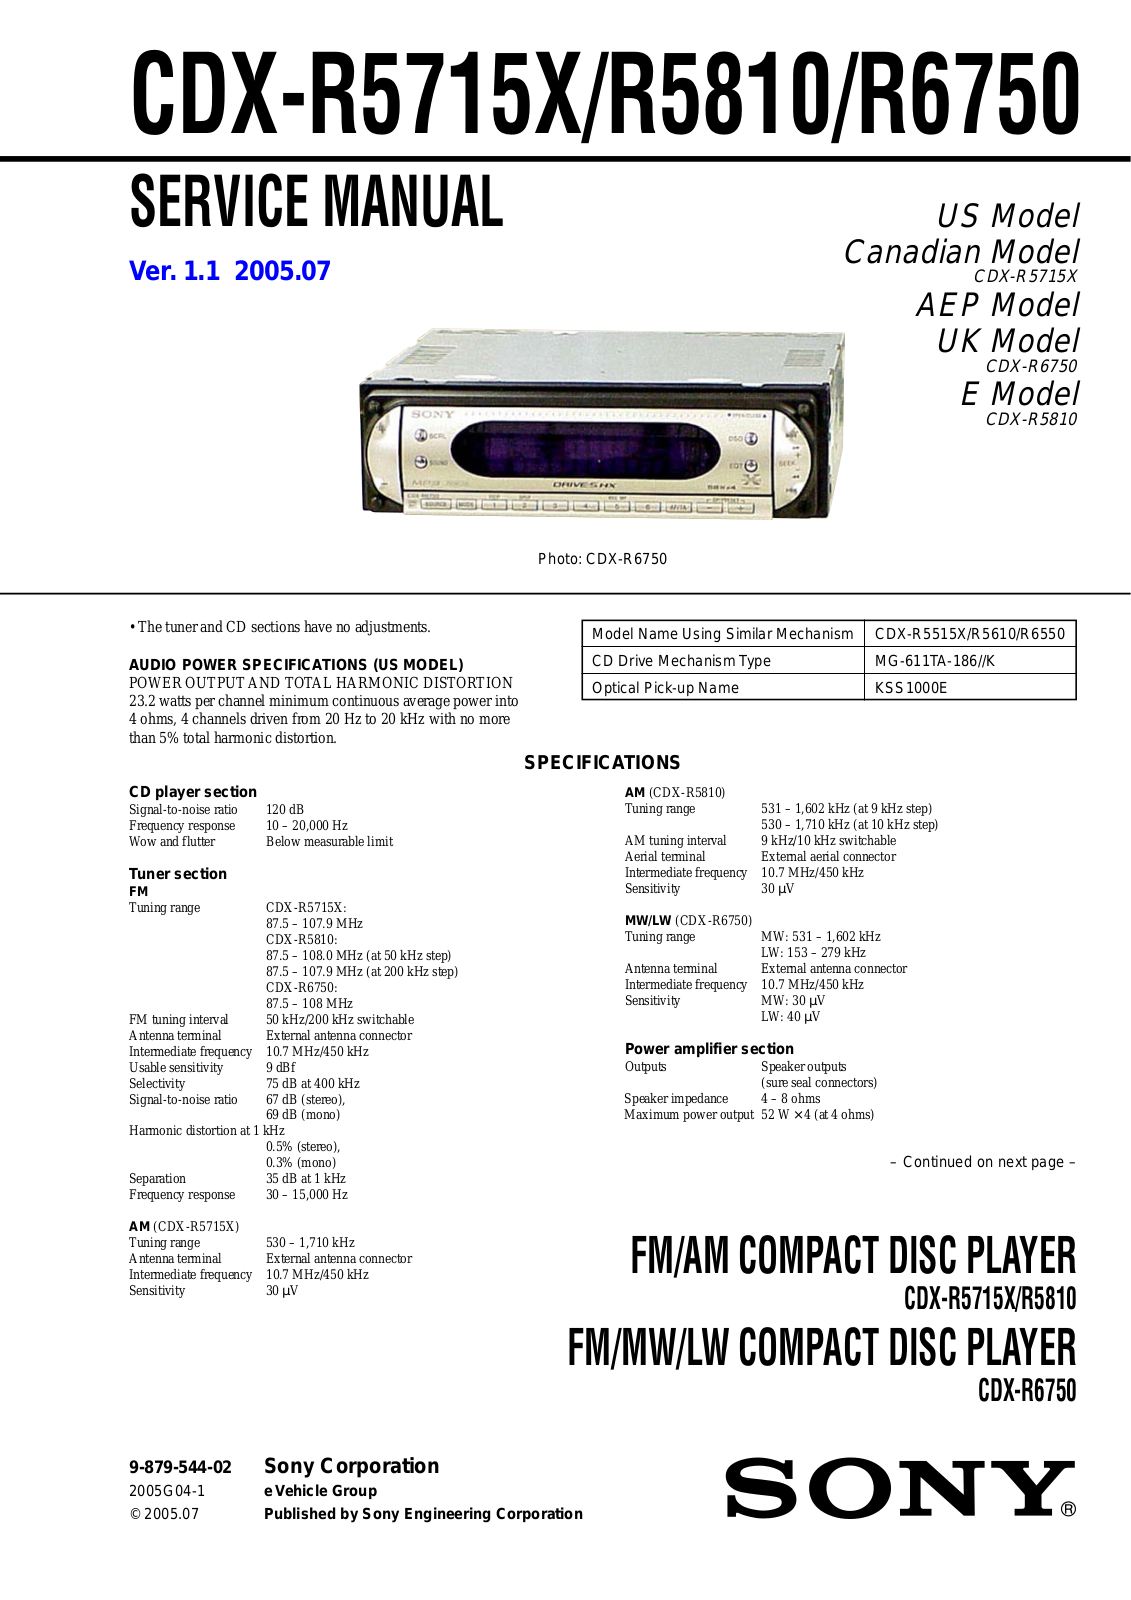 SONY CDX-R5715, CDX- R5810, CDX- R6750 Service Manual